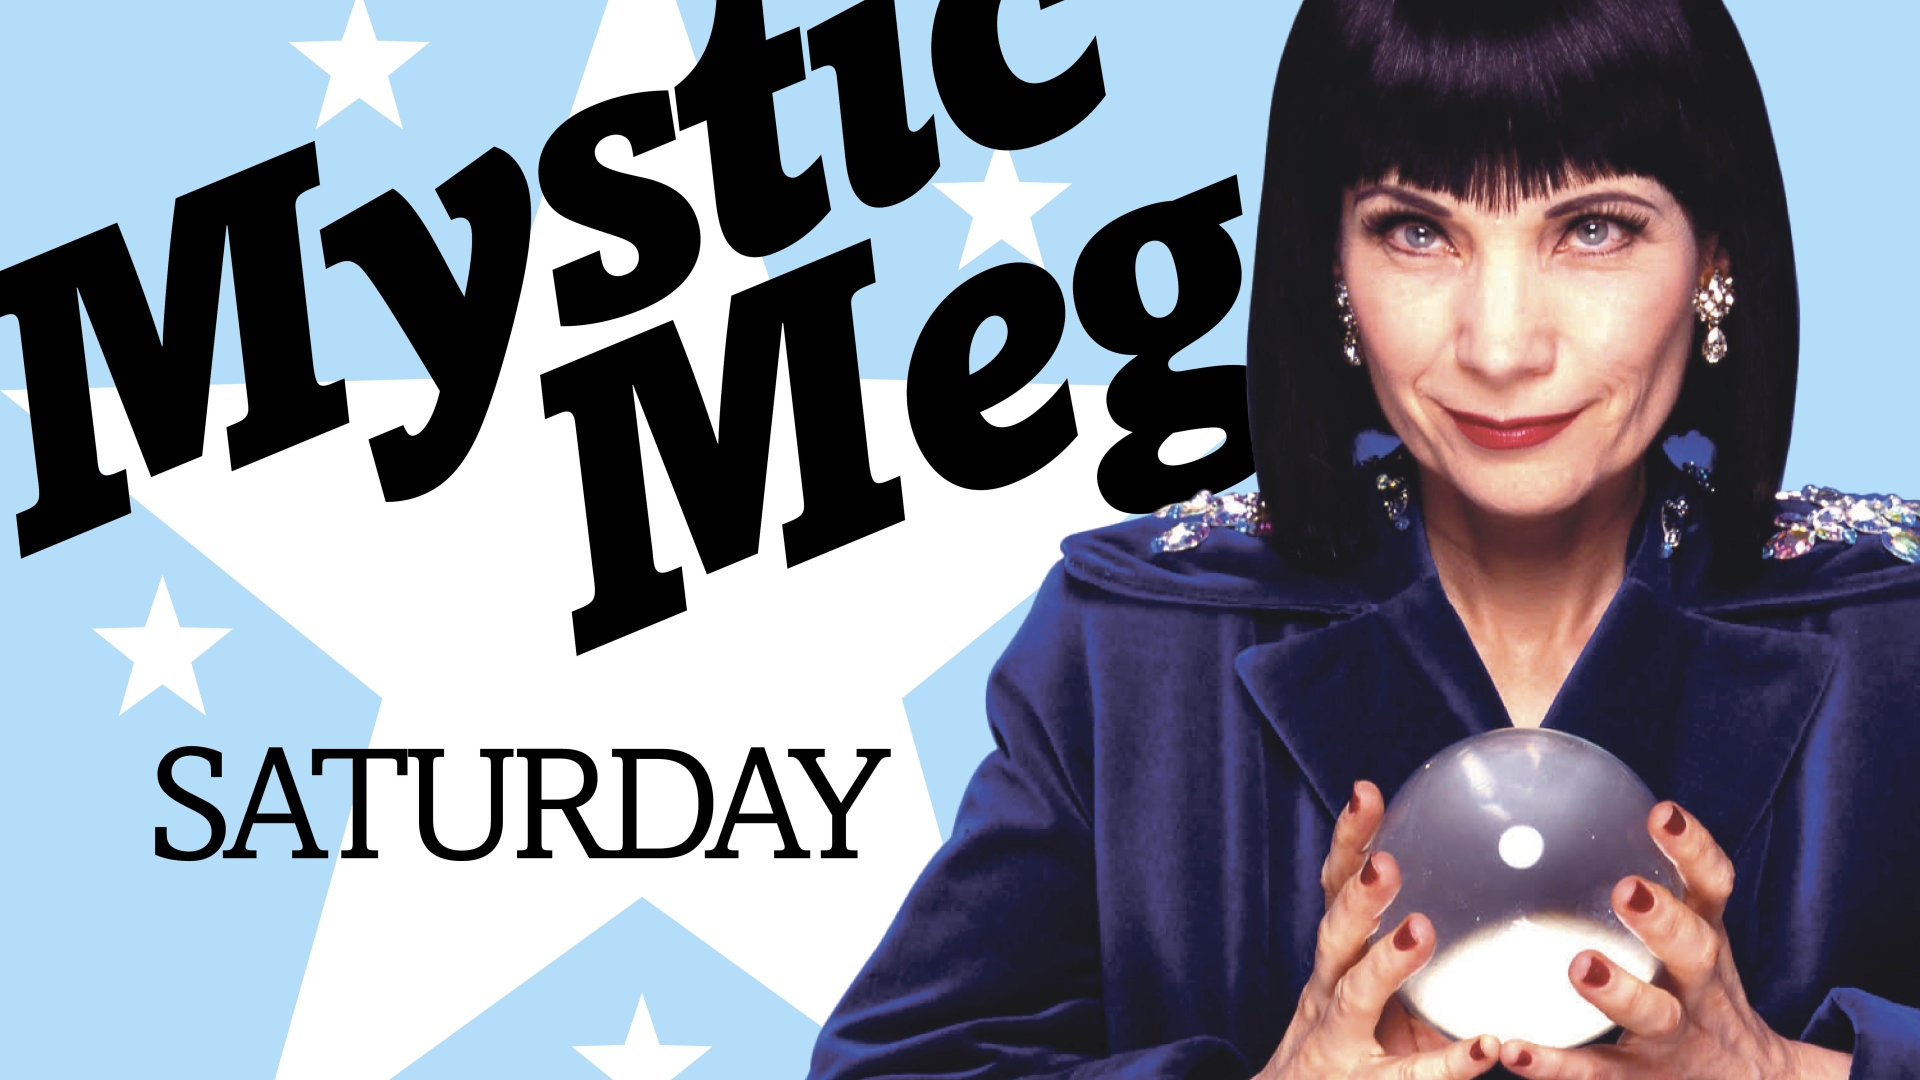 Today’s Horoscope: Daily star sign guide for Mystic Meg, November 12